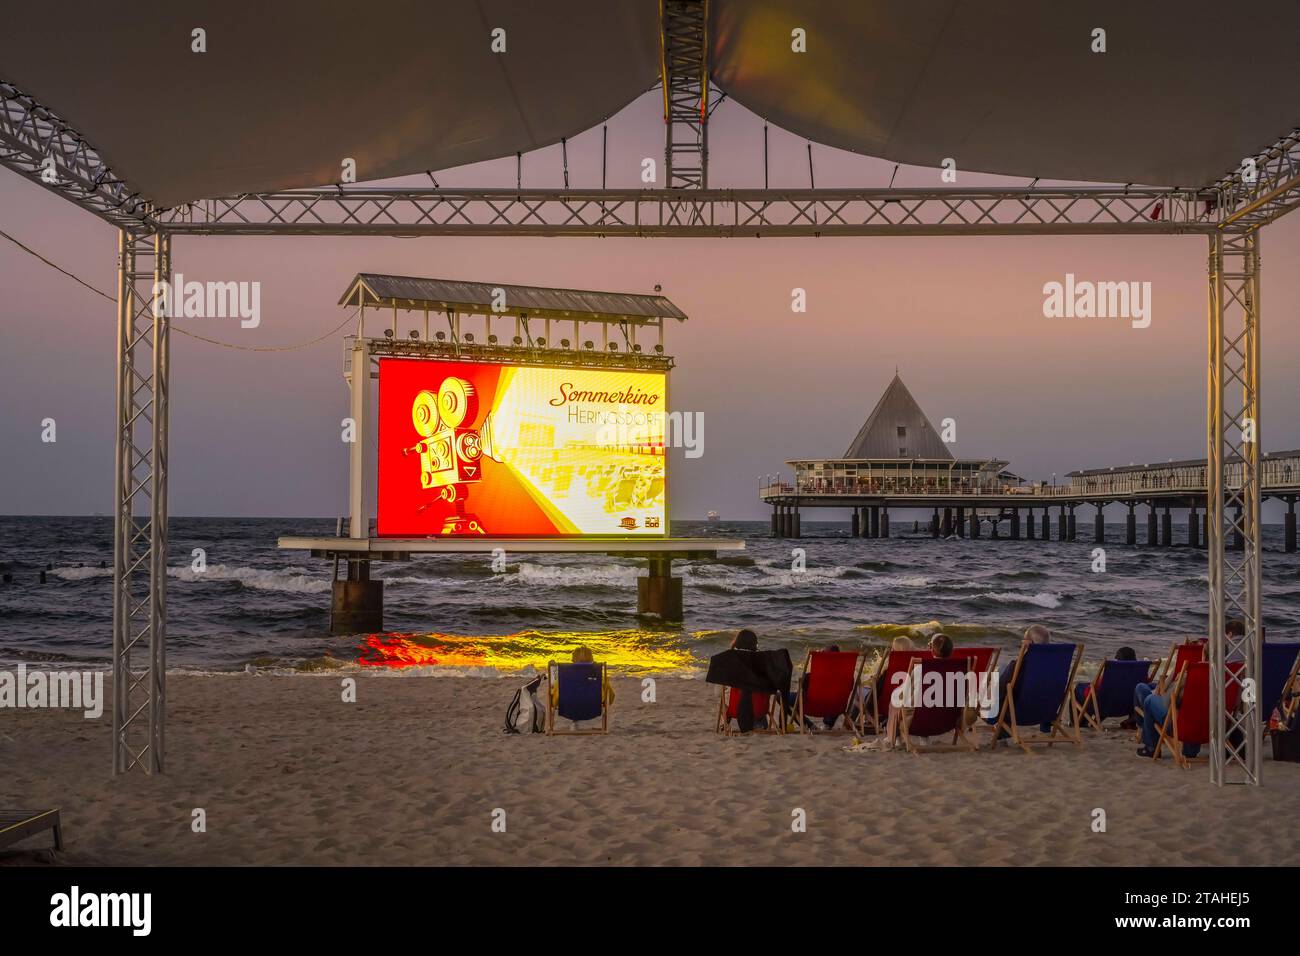 https://c8.alamy.com/comp/2TAHEJ5/sommerkino-am-strand-leinwand-led-projektion-im-meer-ostsee-heringsdorf-usedom-mecklenburg-vorpommern-deutschland-summer-cinema-on-the-beach-screen-led-projection-in-the-sea-baltic-sea-heringsdorf-usedom-mecklenburg-vorpommern-germany-credit-imagoalamy-live-news-2TAHEJ5.jpg